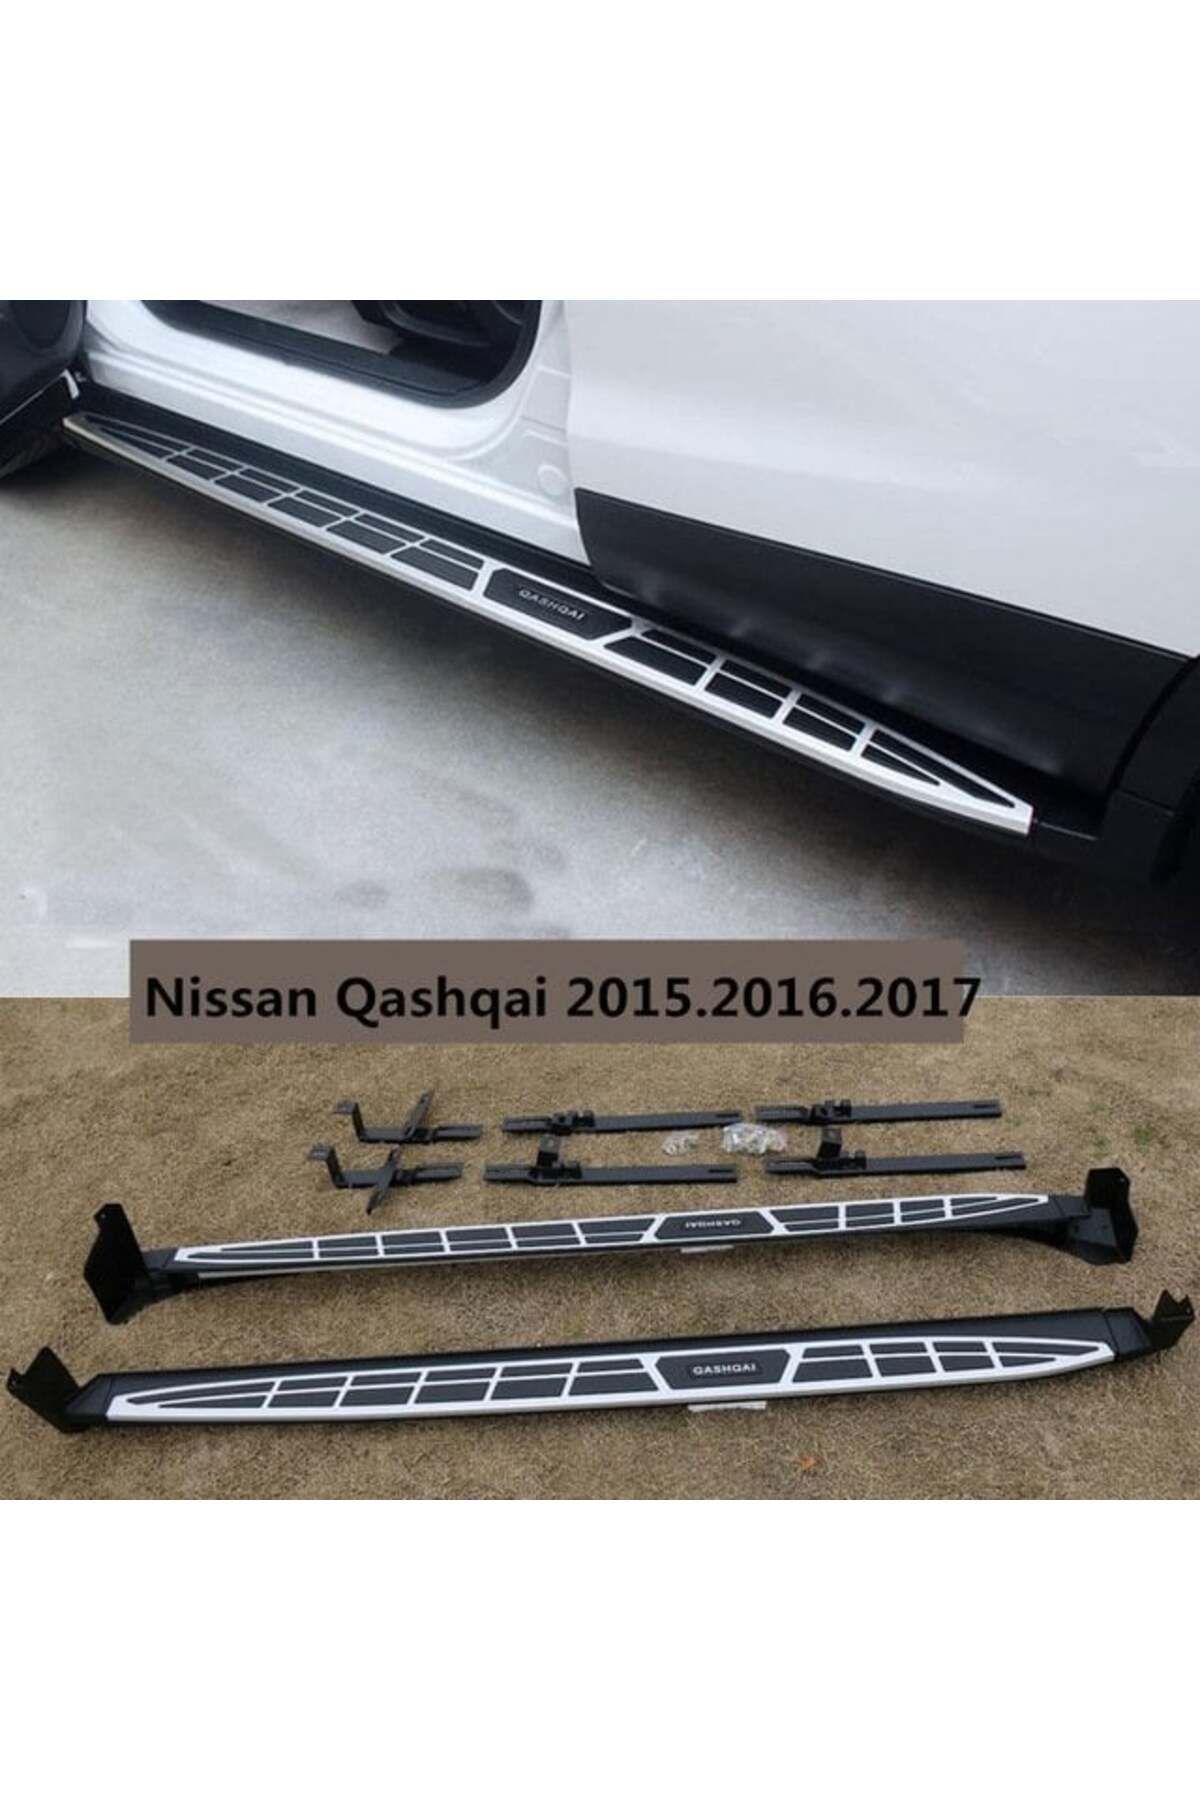 OEM Nissan Qashqai Yan Basamak Marşbiyel Koruma 2014 / 2019 Oem